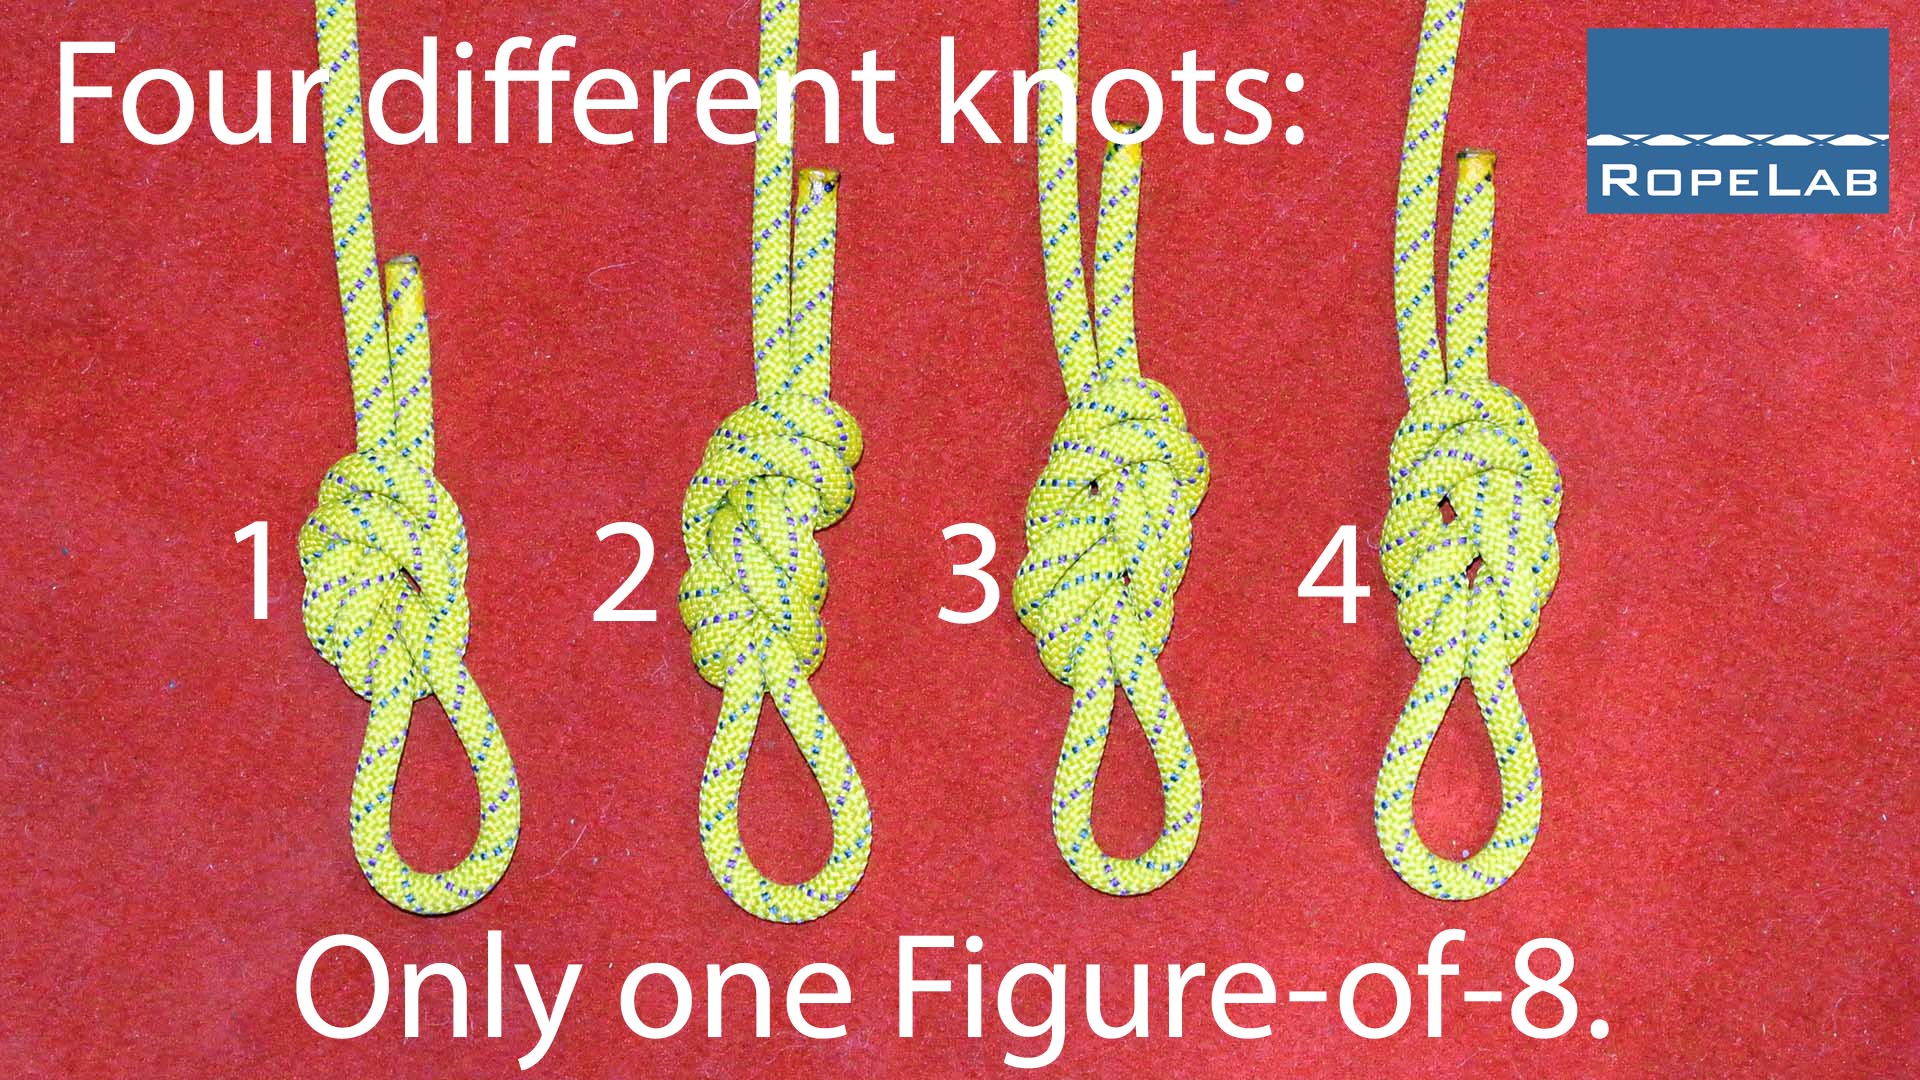 RopeLab Quiz 4: Knot or Not?